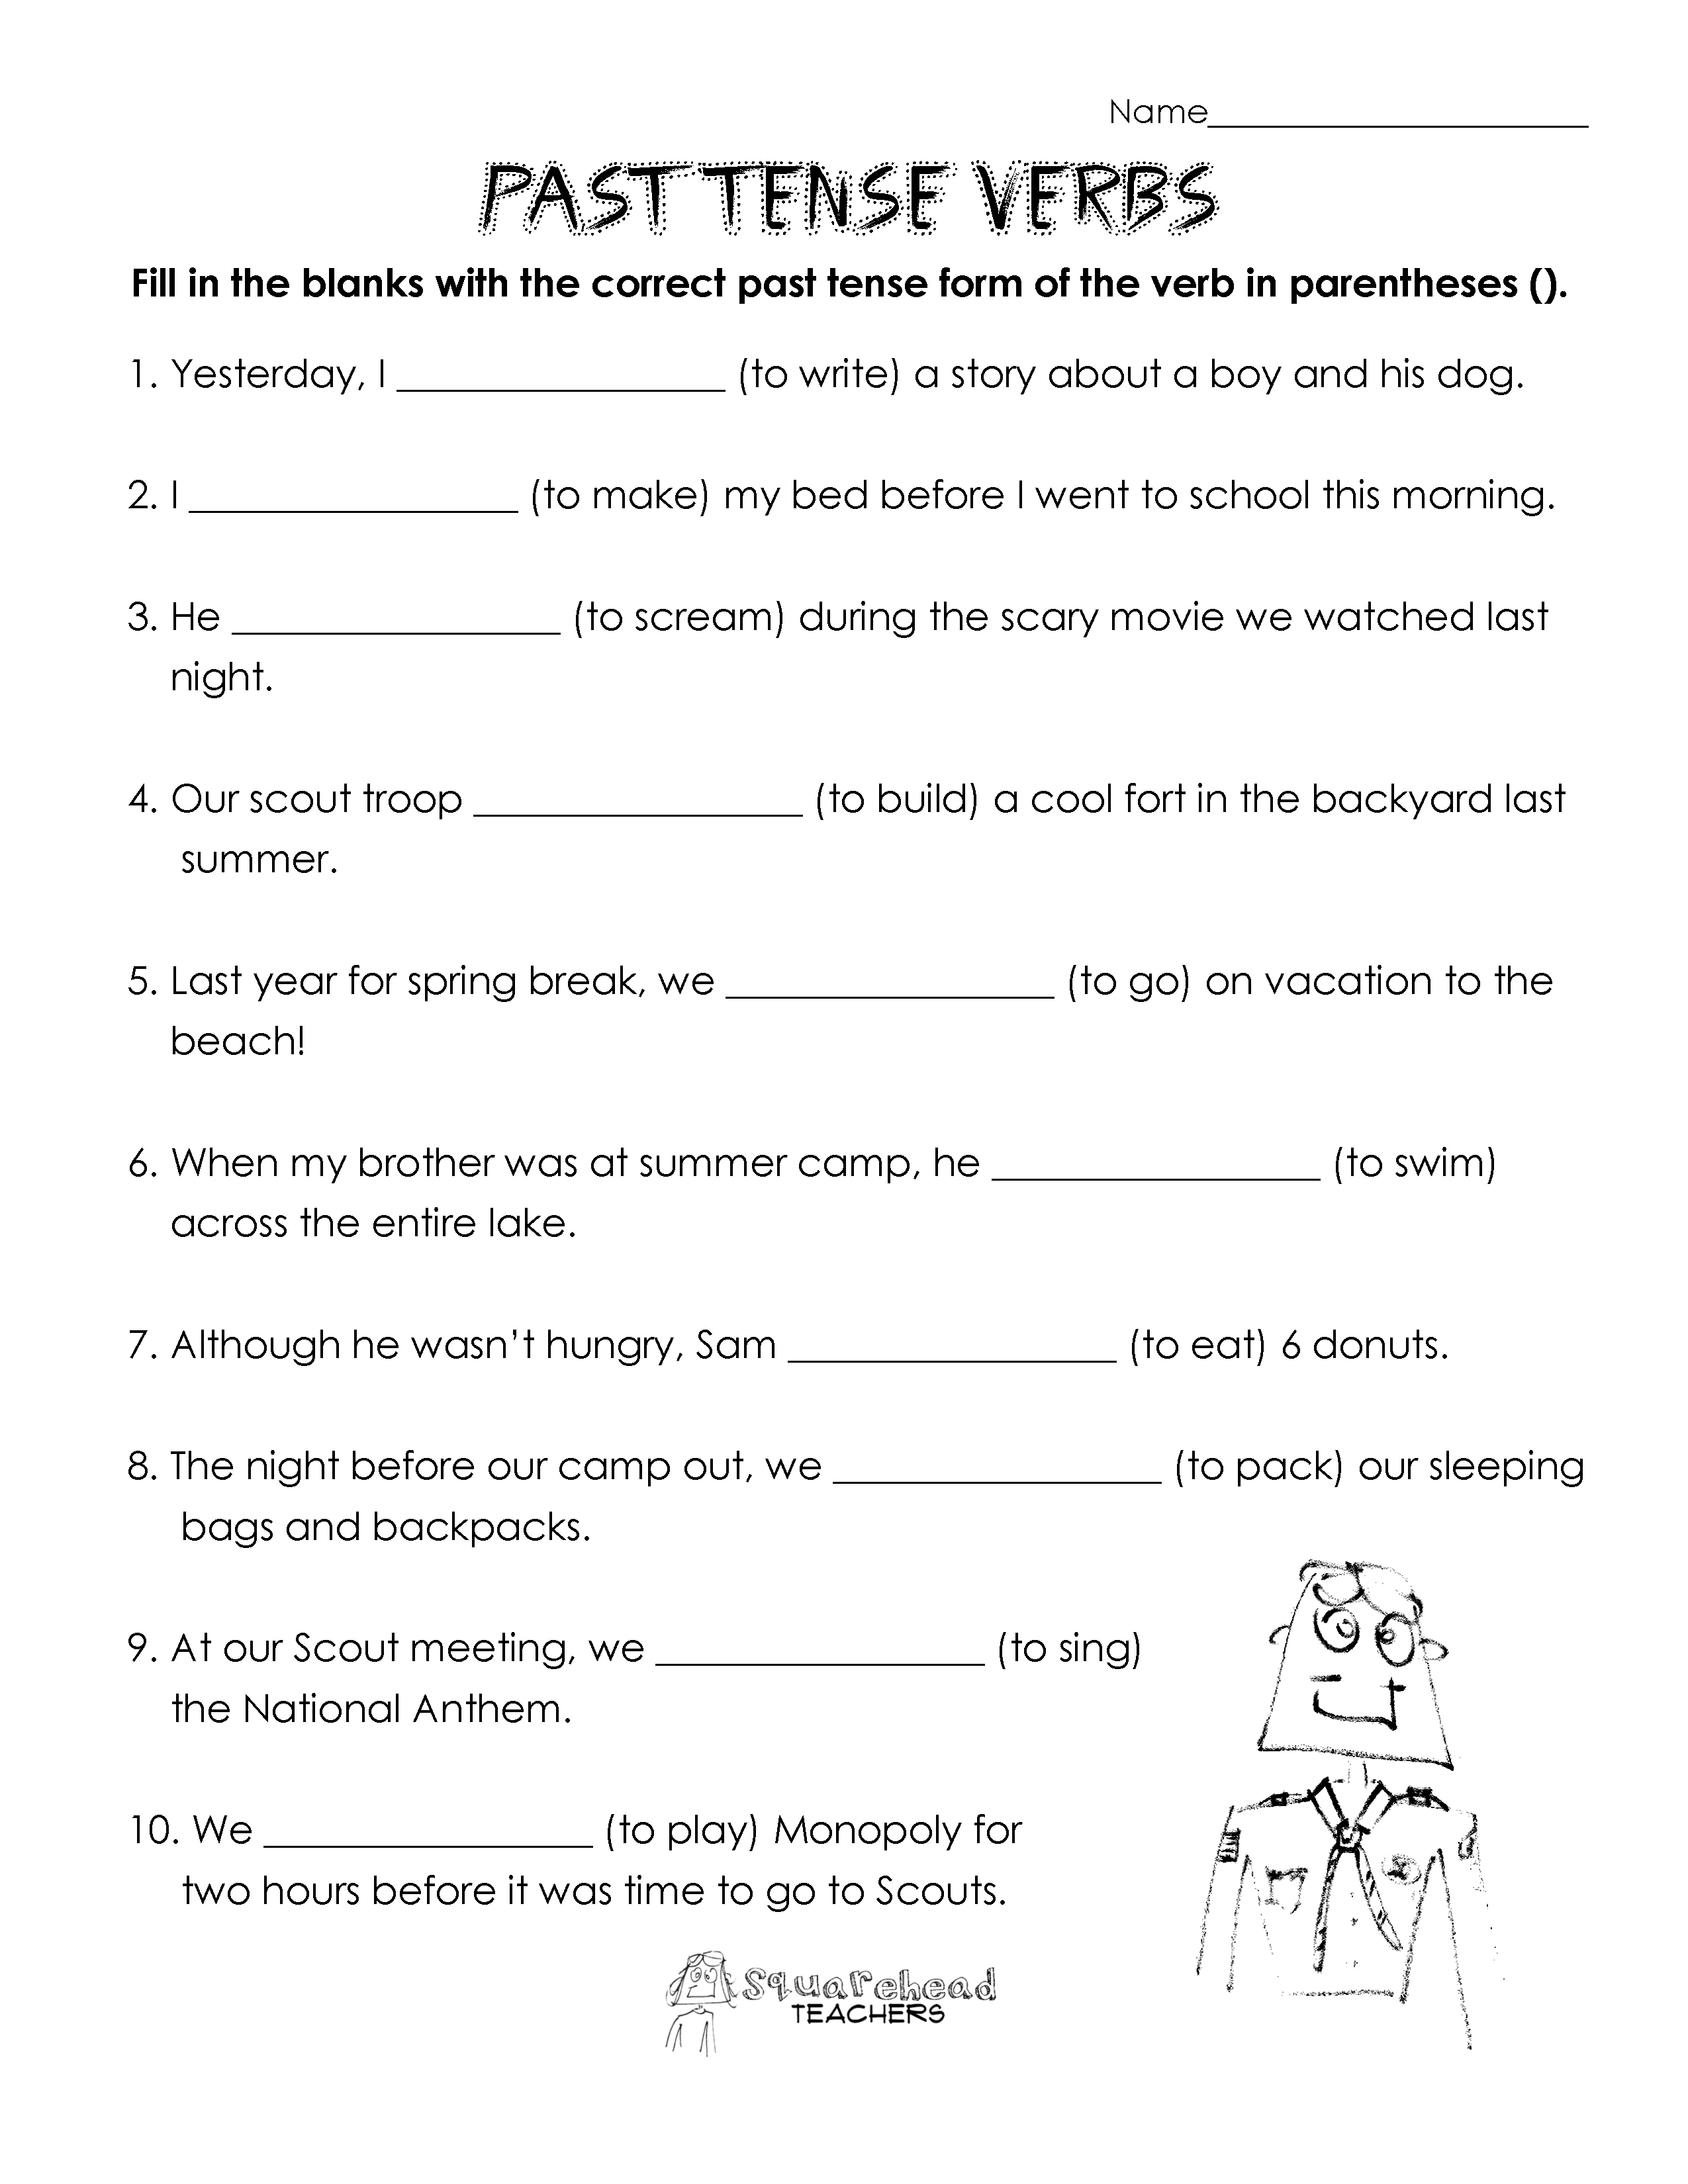 spelling-irregular-verbs-worksheets